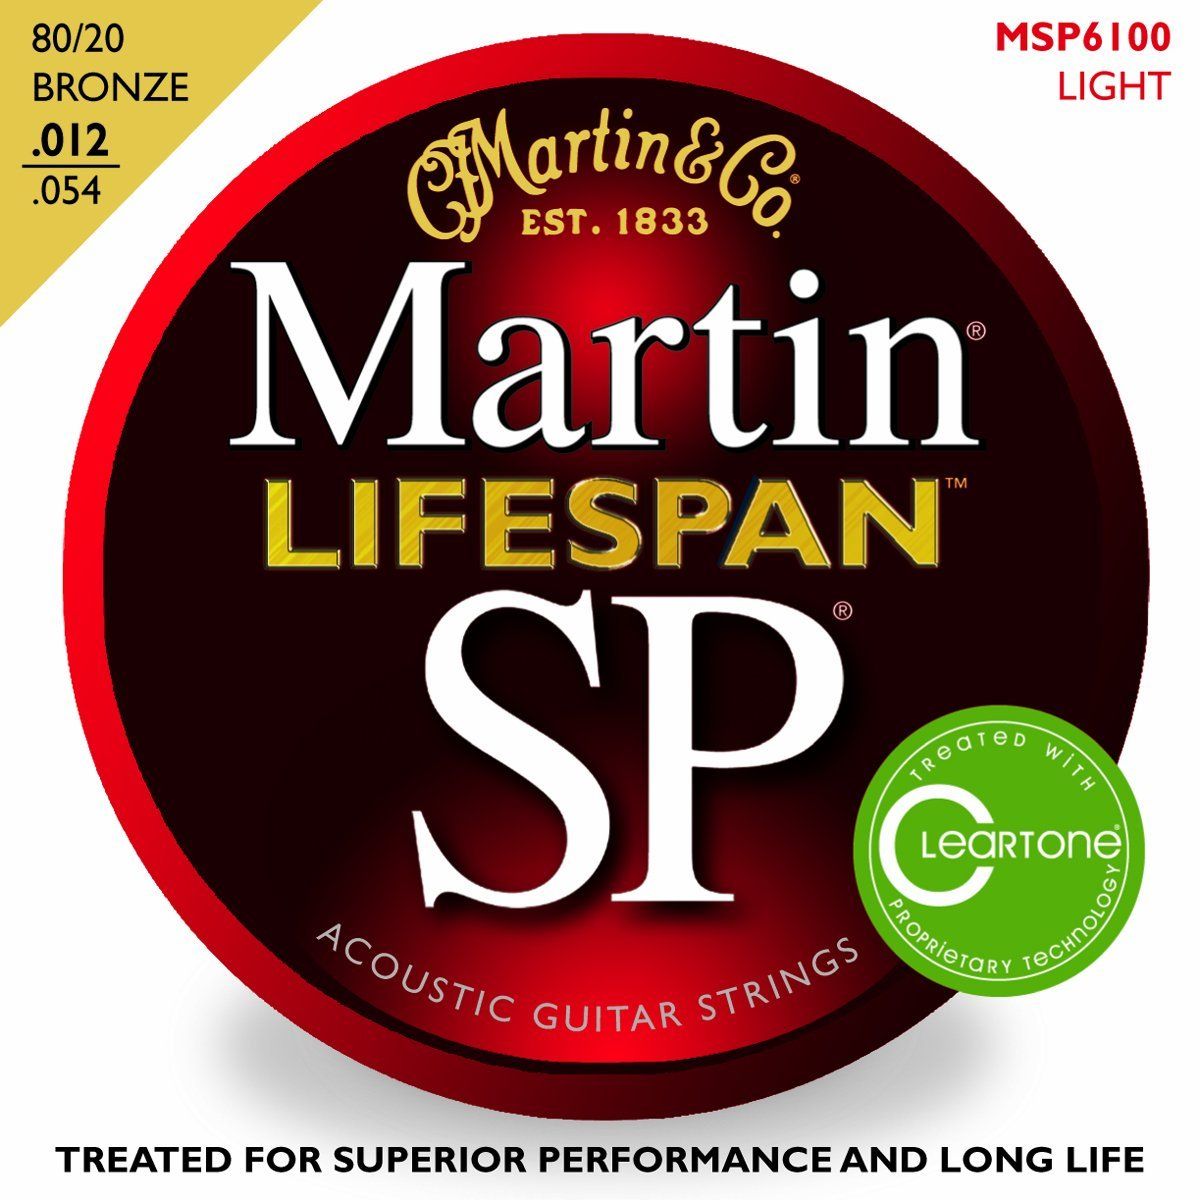 Martin and Co SP Lifespan MSP 6100